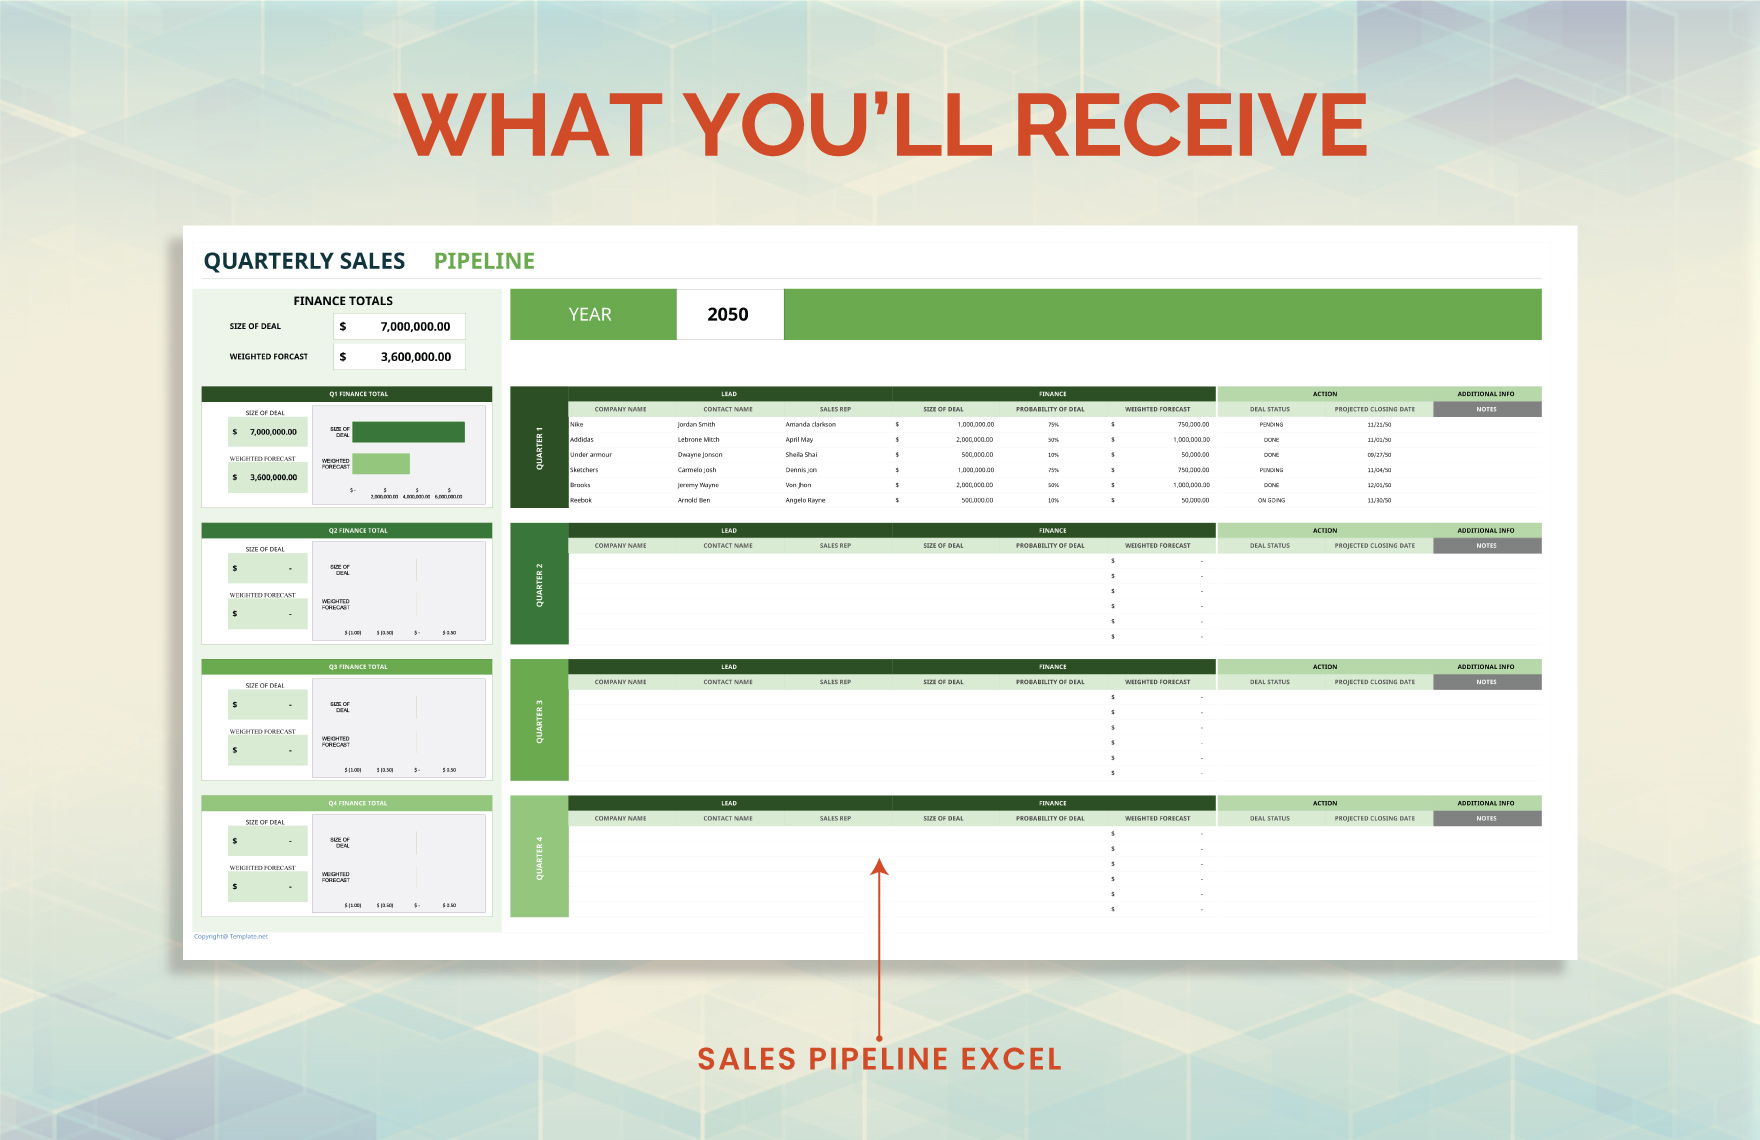 Sales Pipeline Excel Template